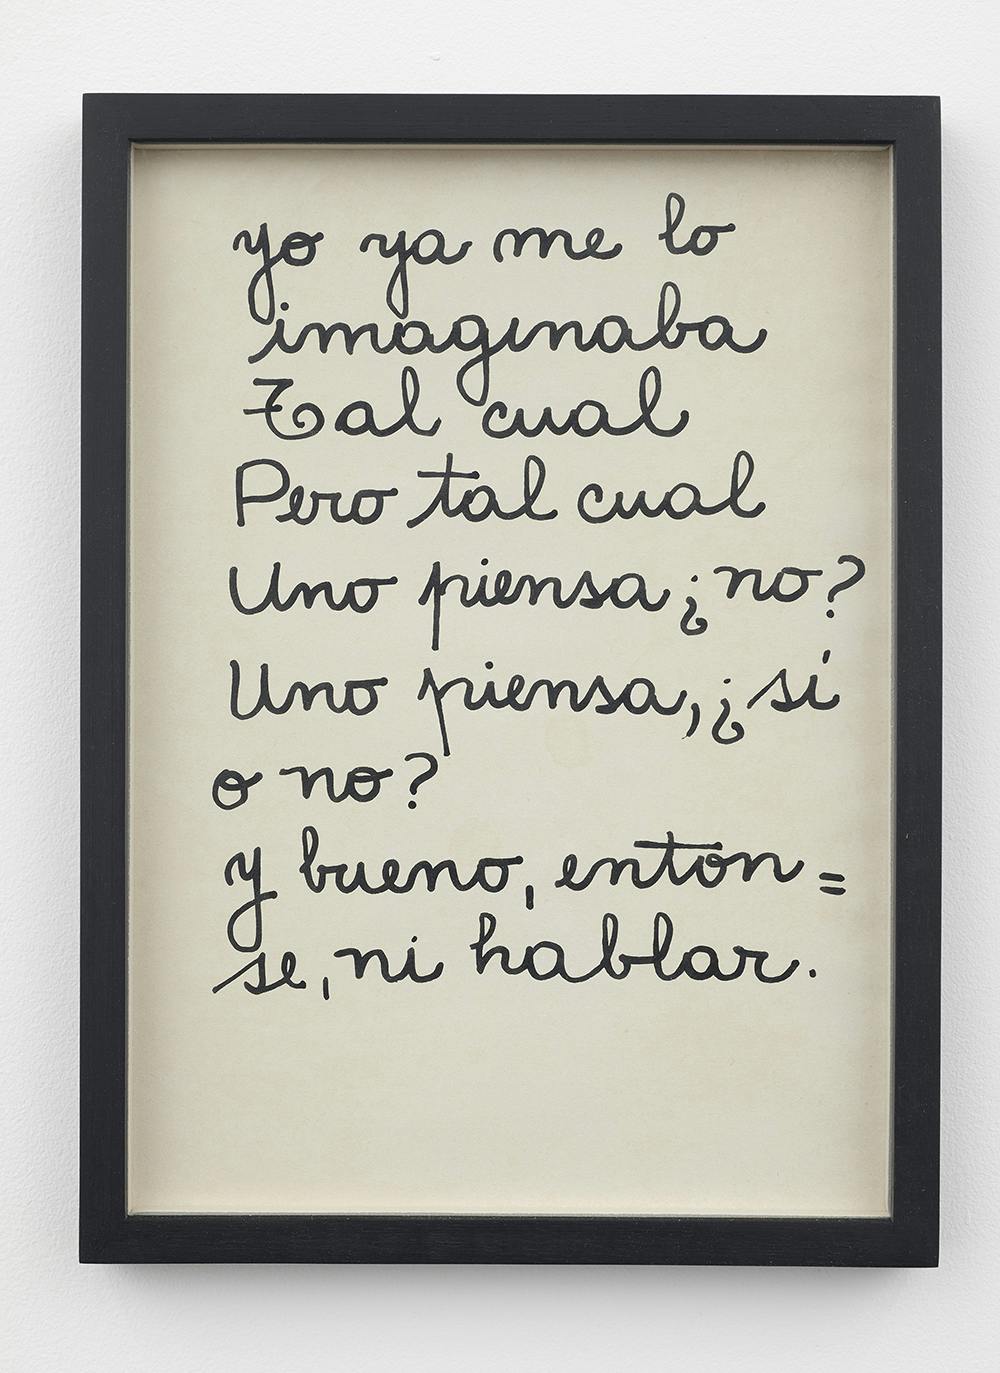 A white page with black cursive text is mounted mounted in a black frame and hung on a white wall. The text reads, “Yo ya me lo / imaginaba / Tal cual / pero tal cual / Uno piensa ¿no? / Uno piensa, ¿si / o no? / y bueno, enton= / se, ni hablar.”